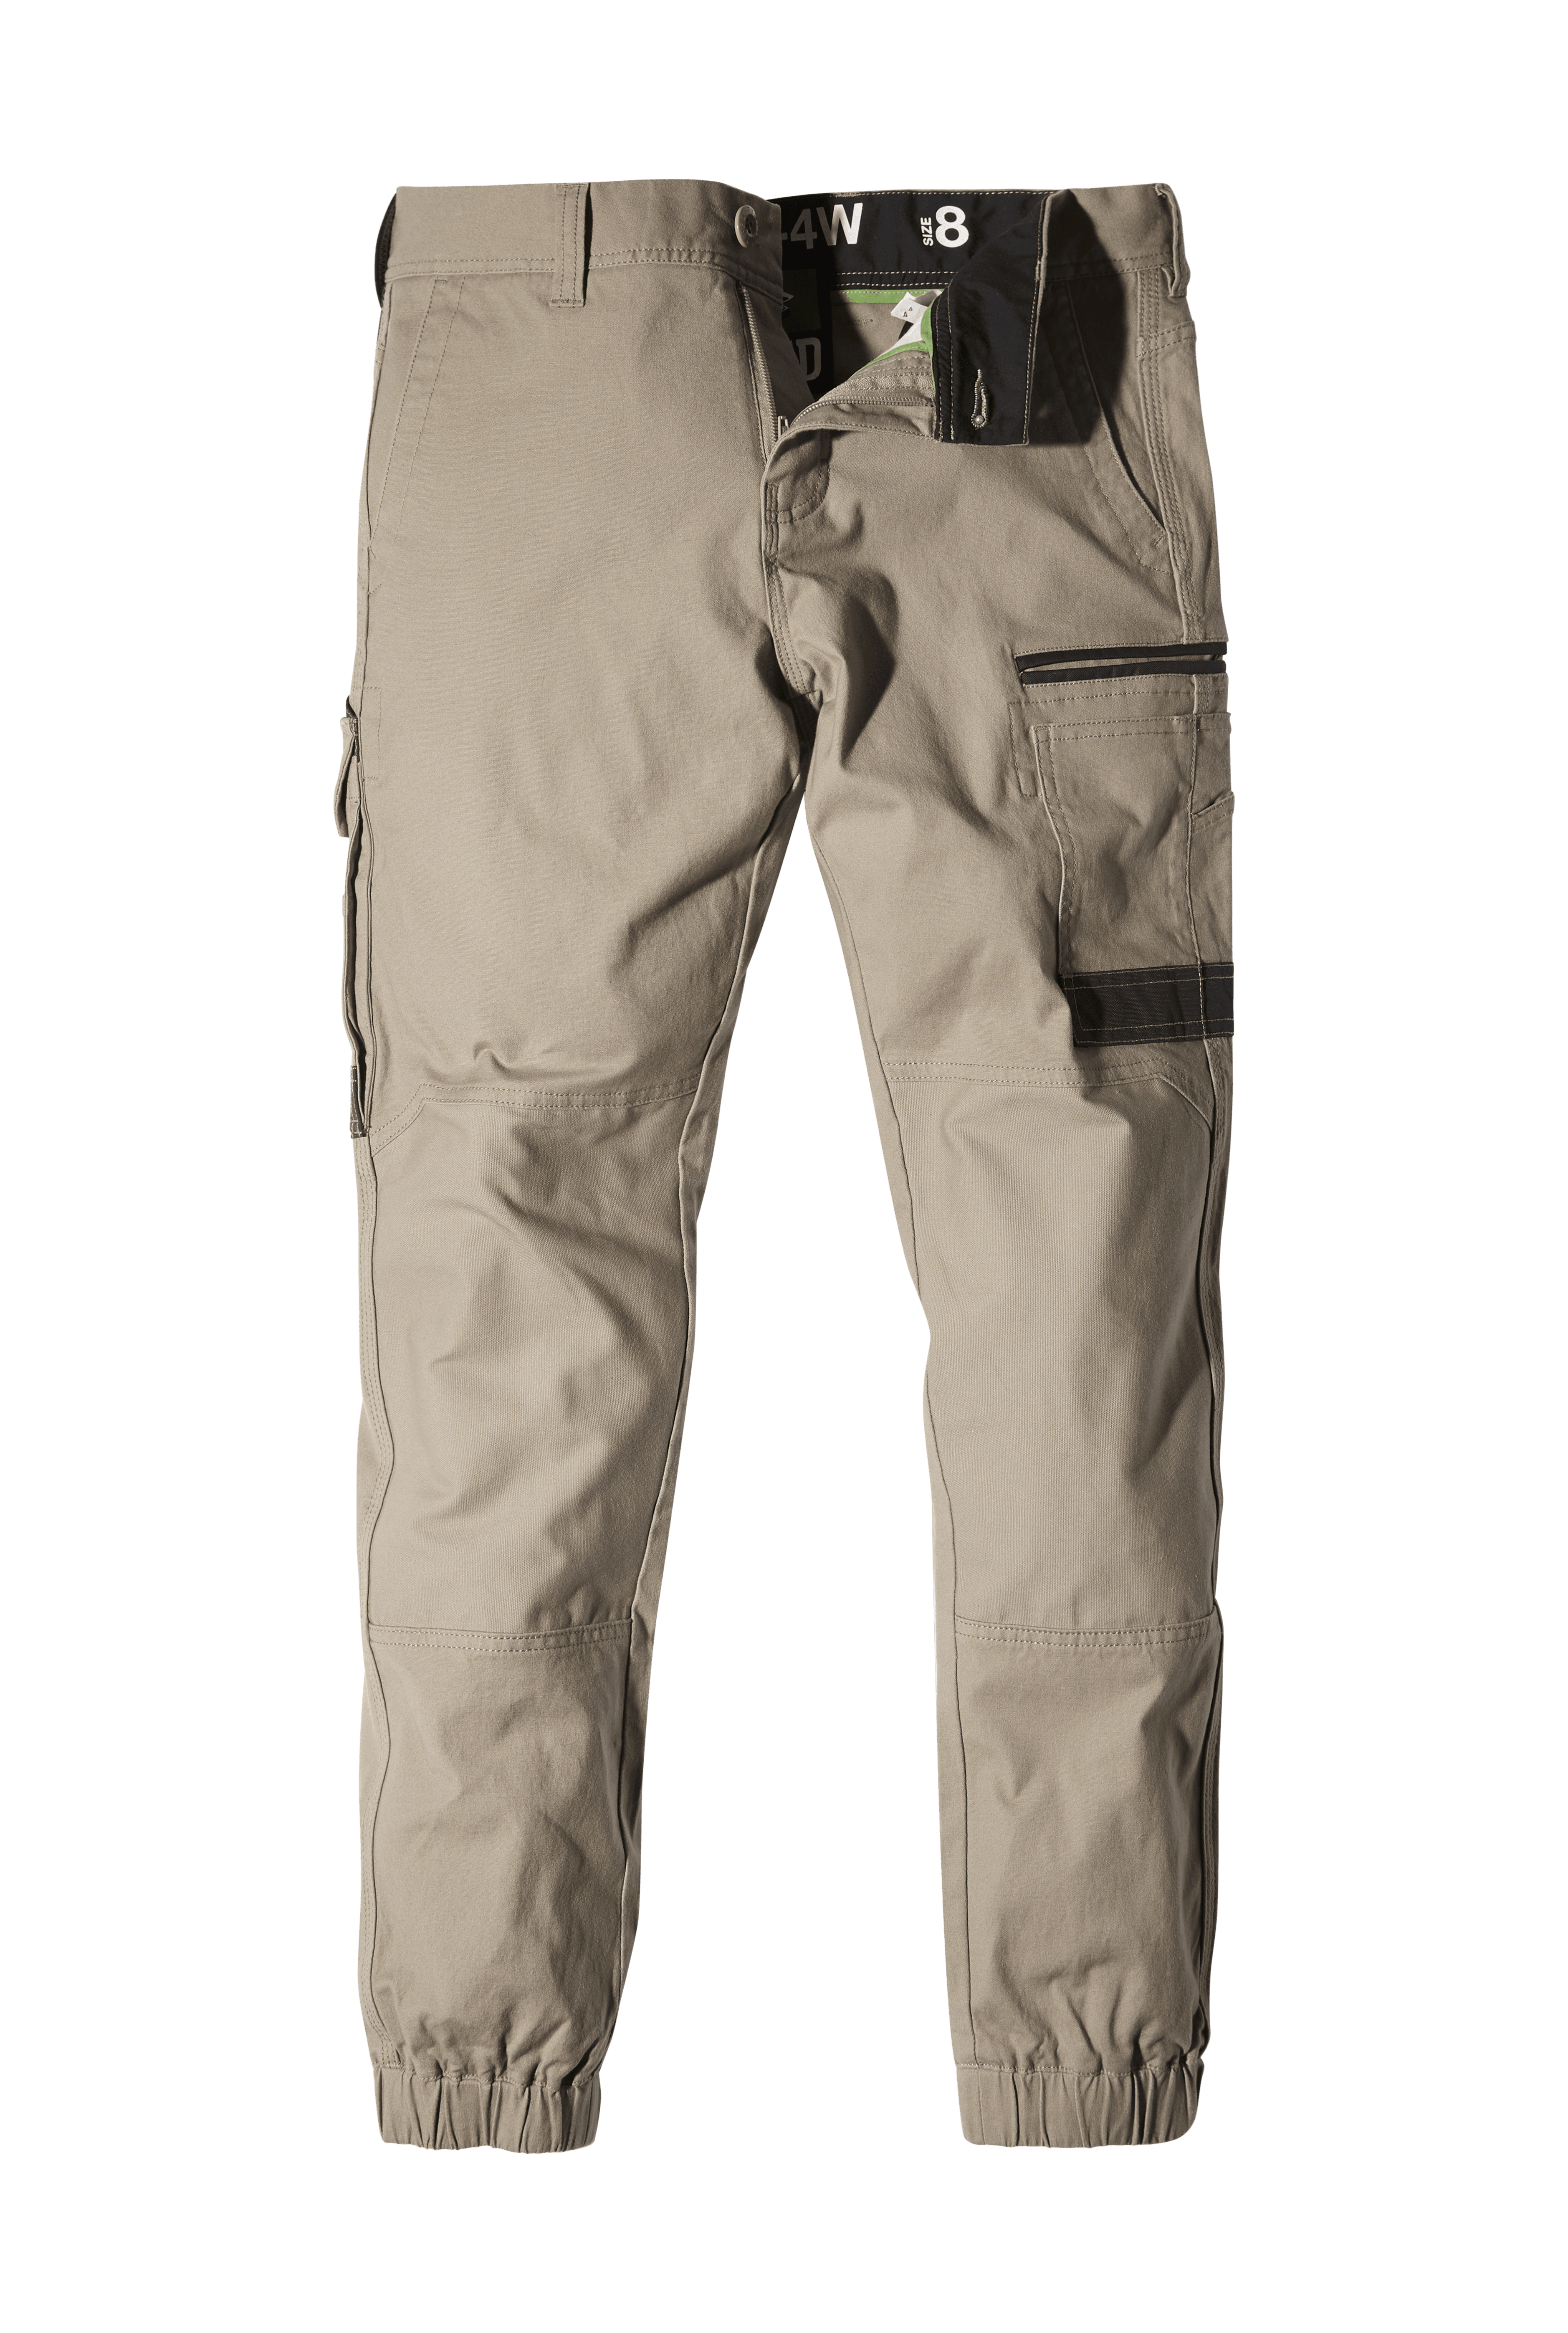 FXD - WP-4W Women's Cuffed Work Pants - Black